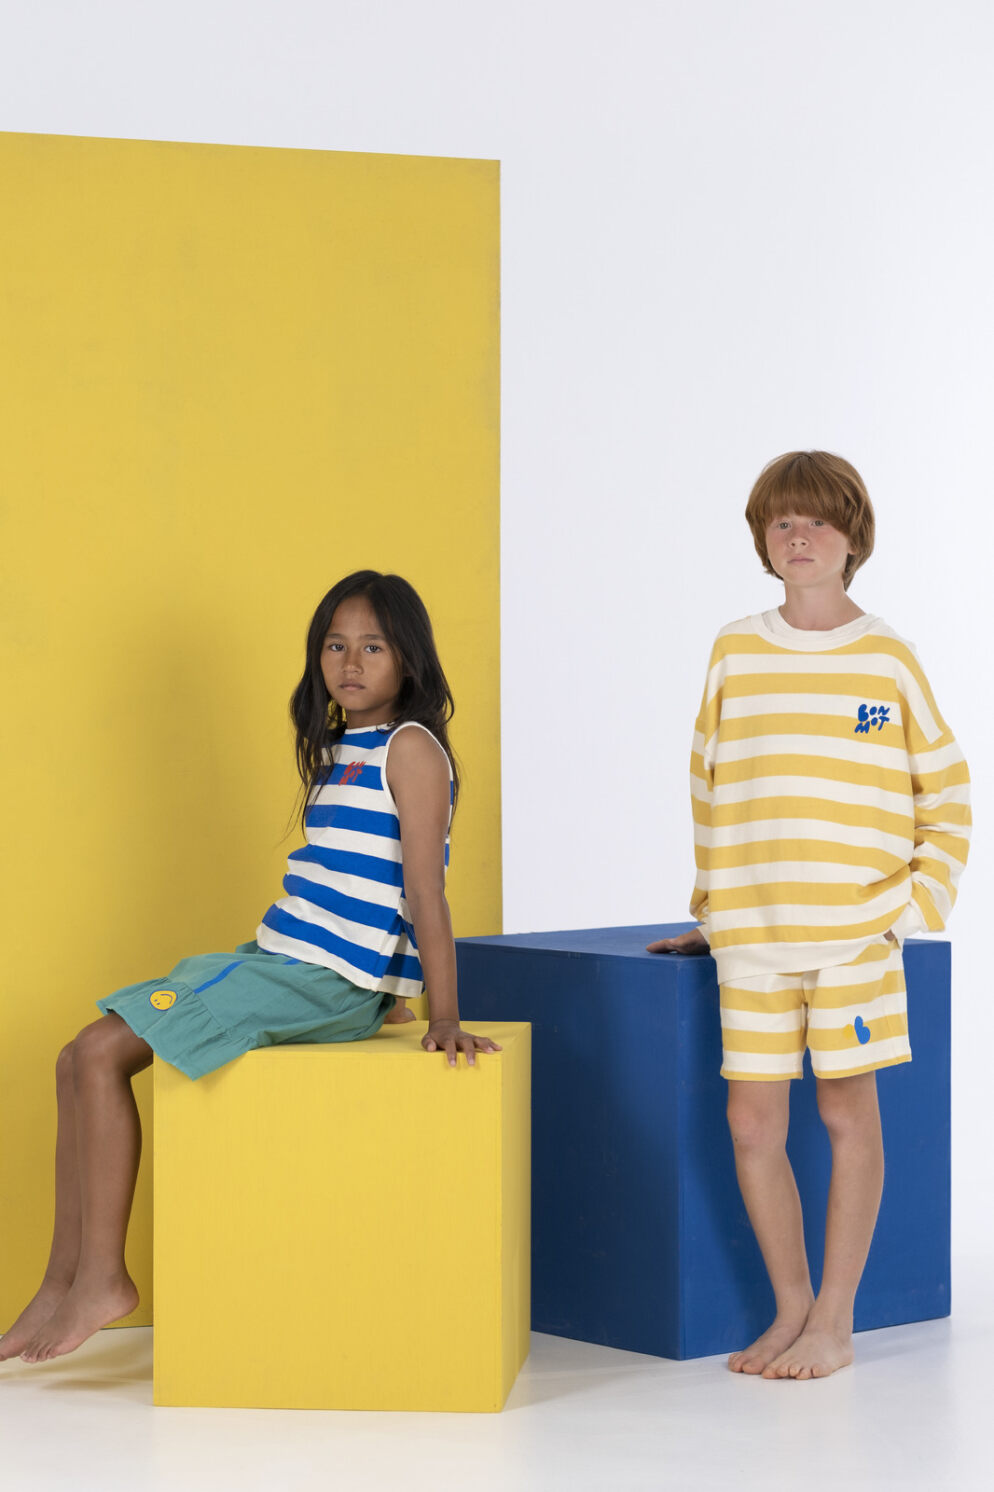 Bonmot - sweatshirt - wide stripes - ivory &amp; yellow